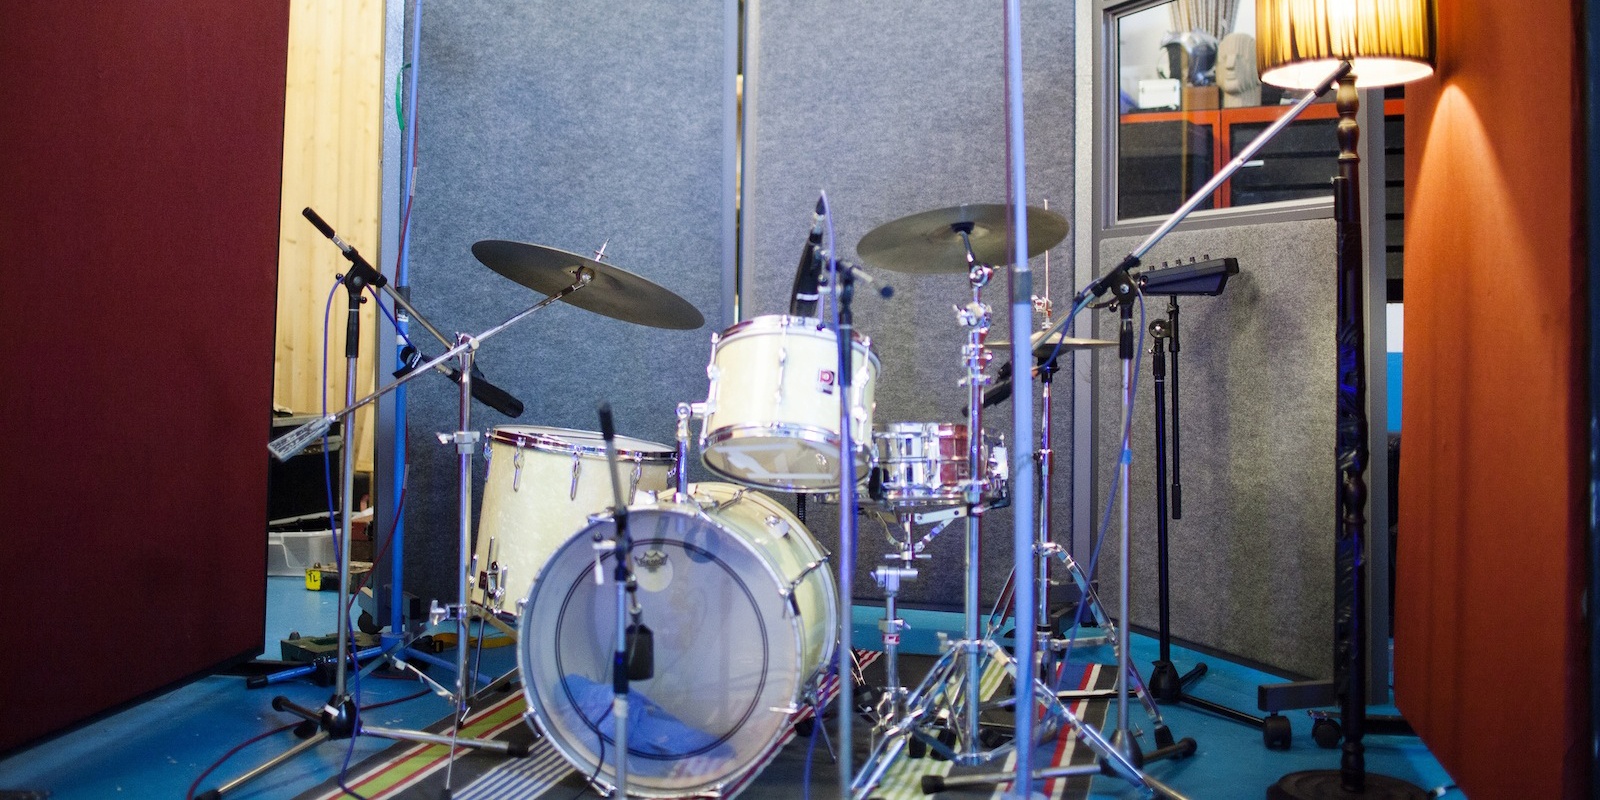 London drum recording